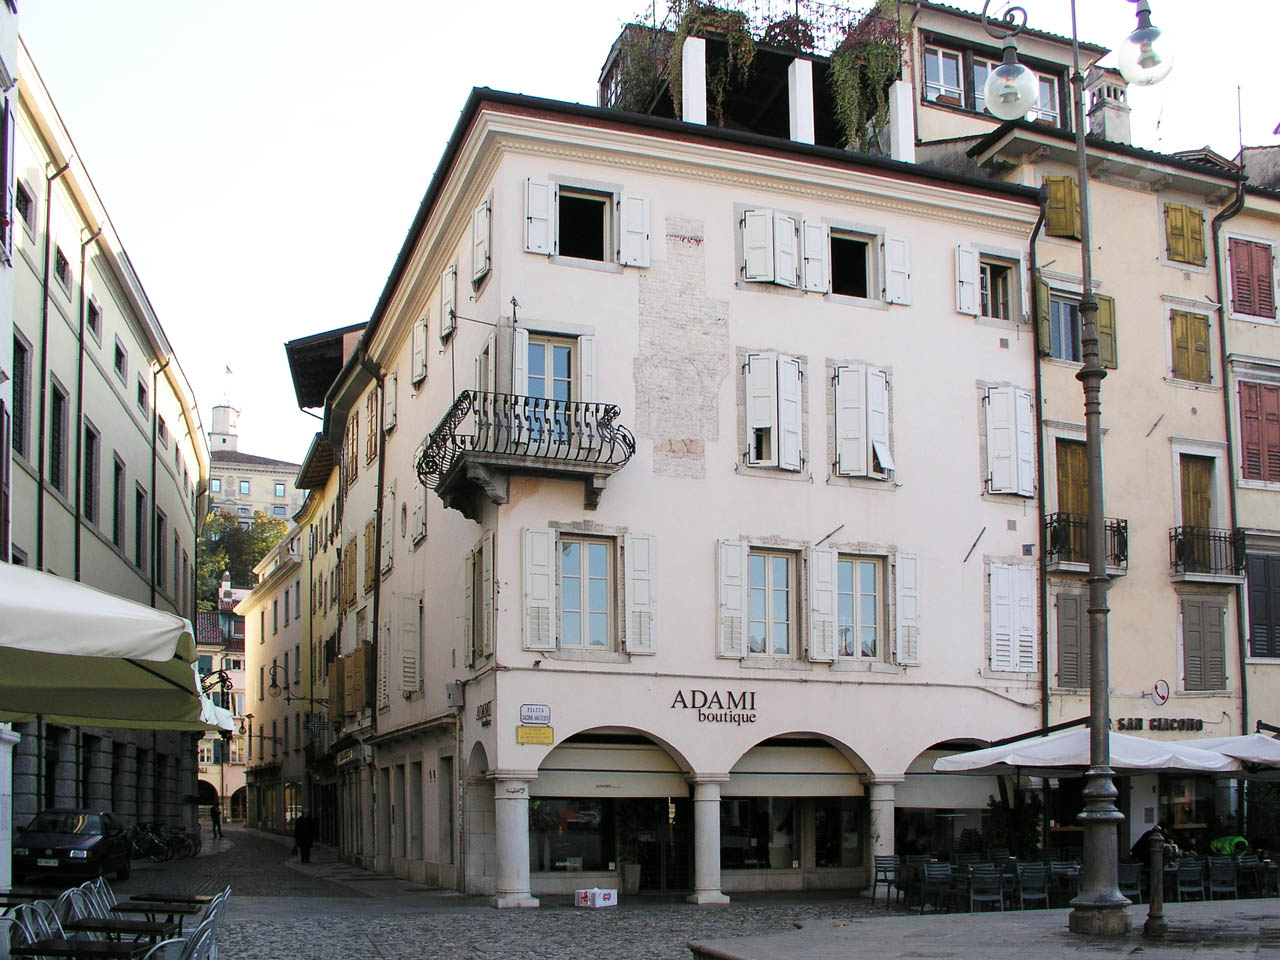 Casa Rubazzer in Piazza Matteotti (casa, in linea) - Udine (UD) 